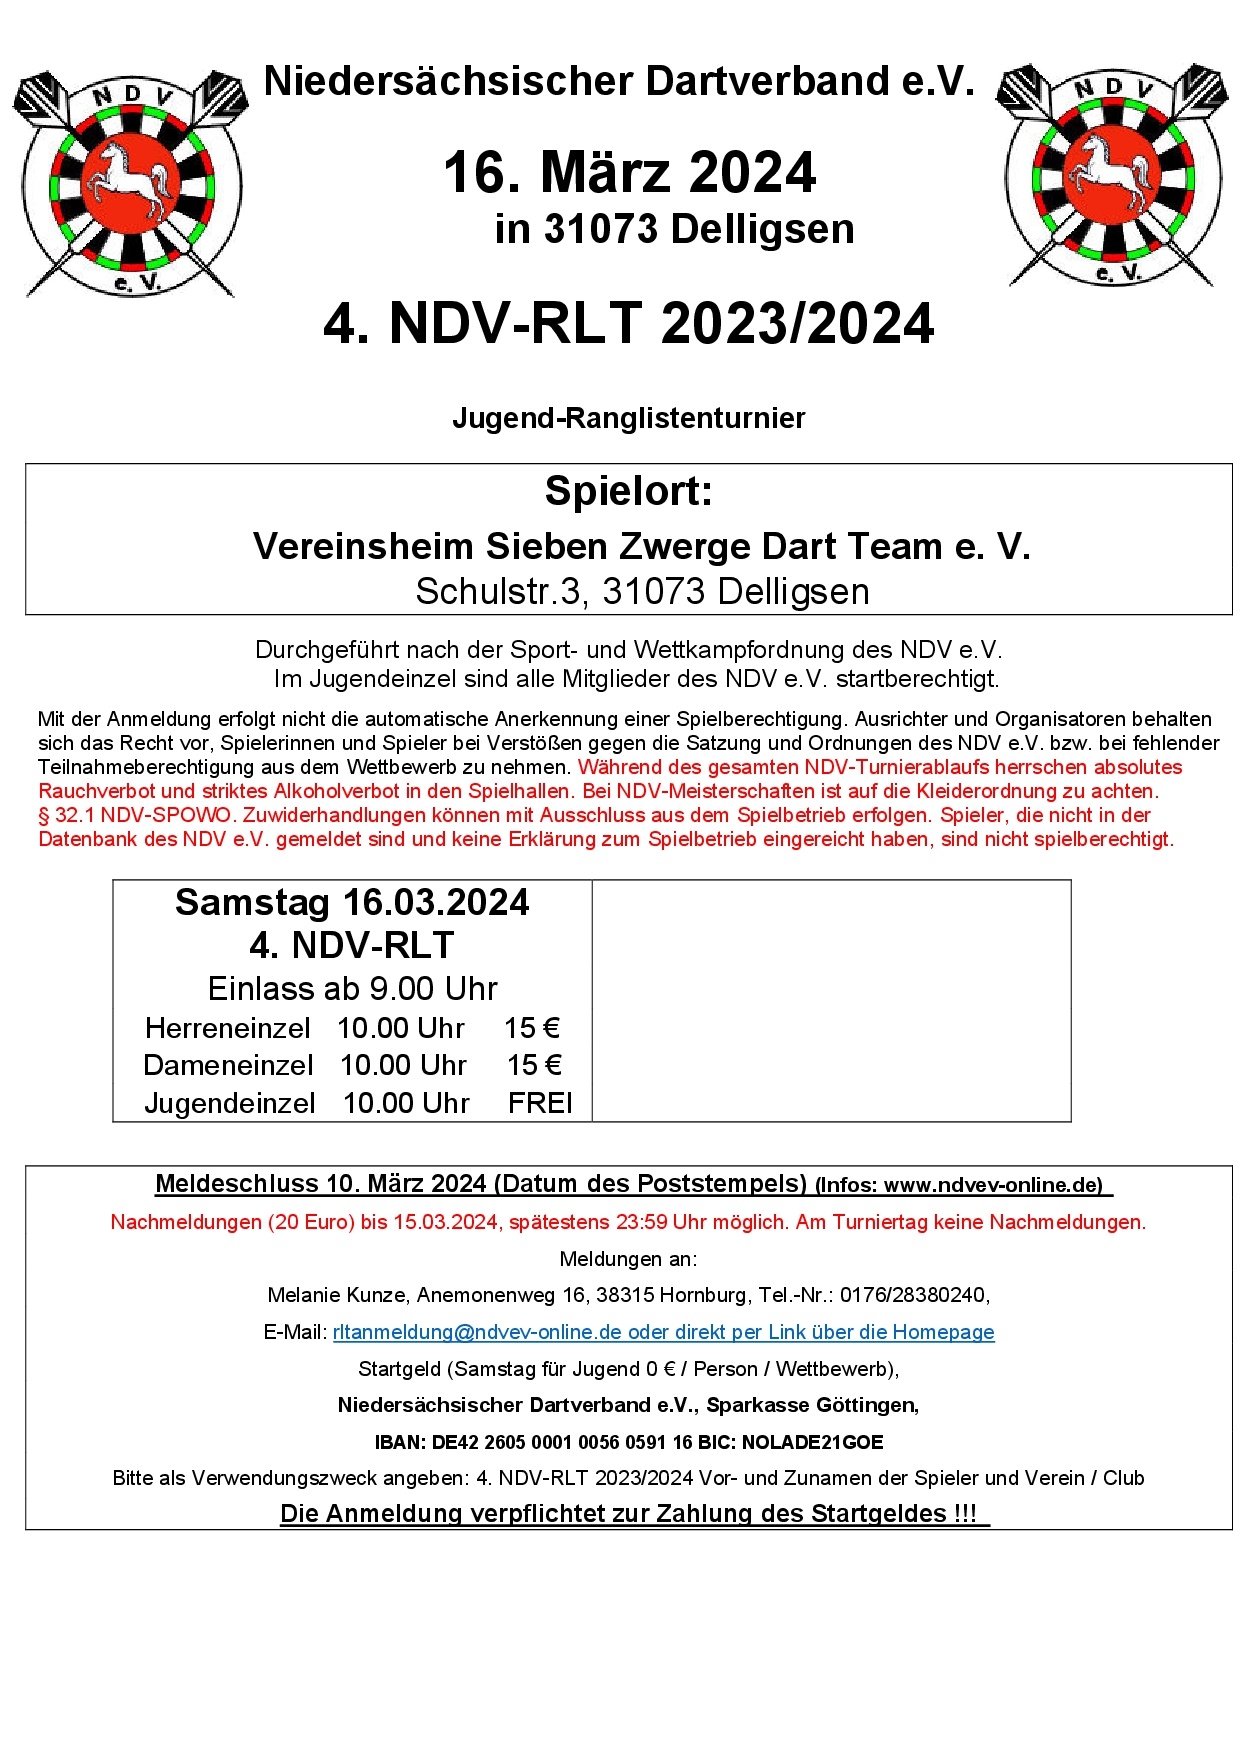 4. NDV-RLT Jugend 2023/2024